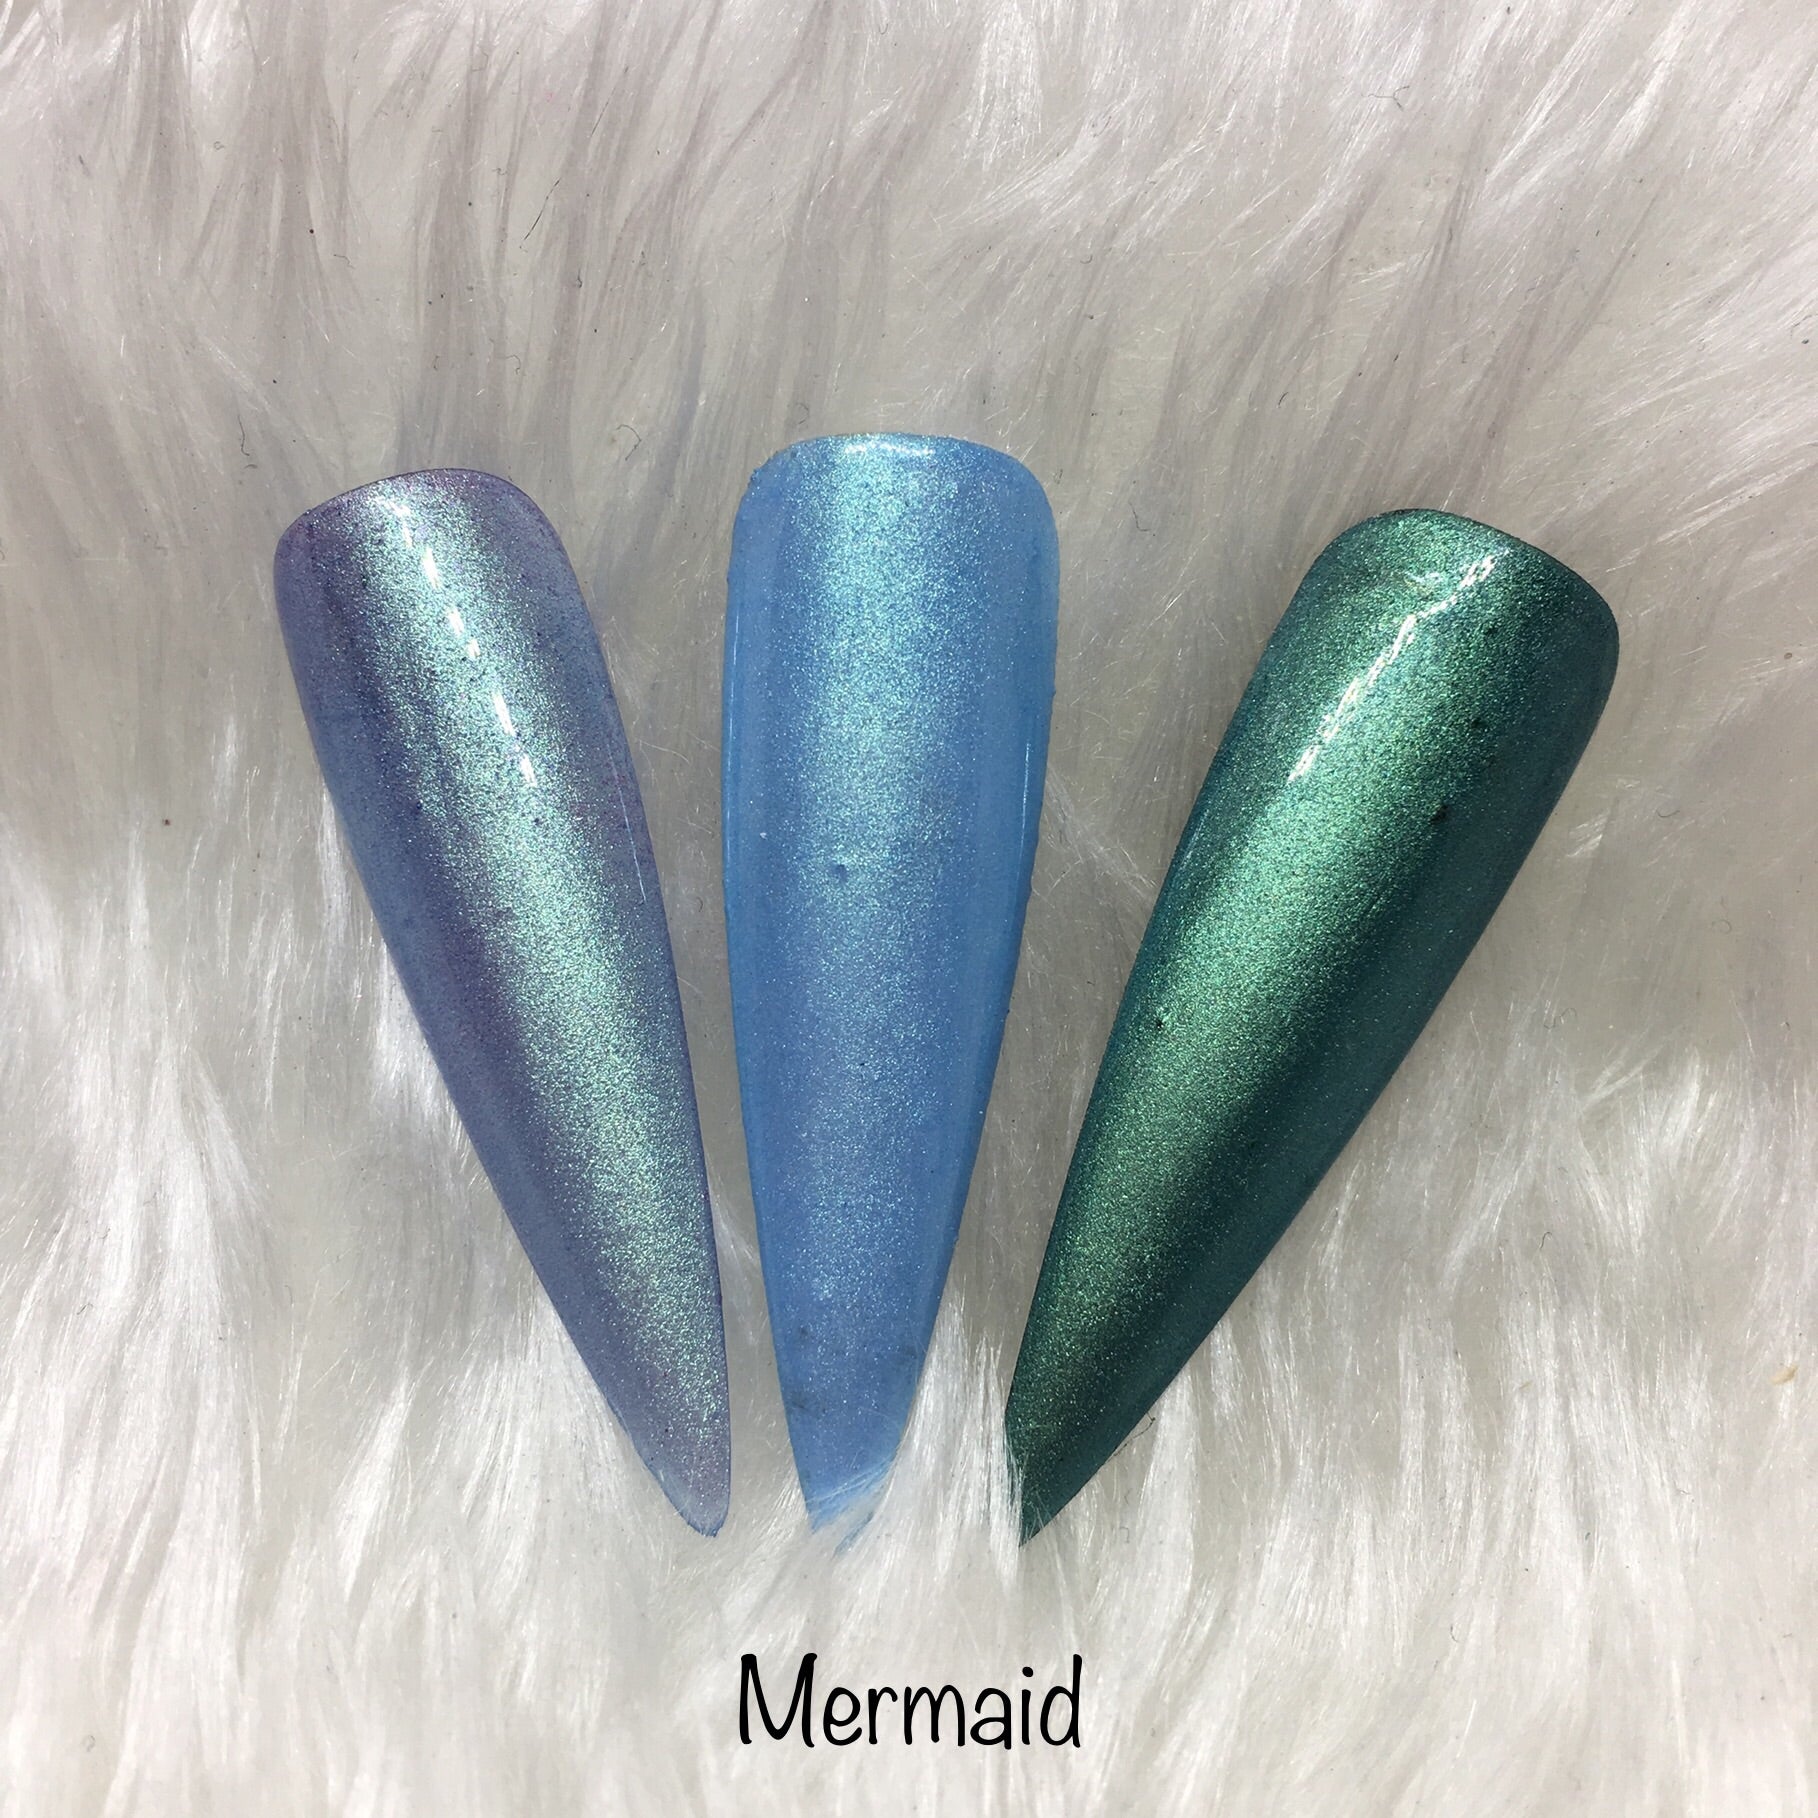 Mermaid-Pigments-Incandescent Shine Ltd